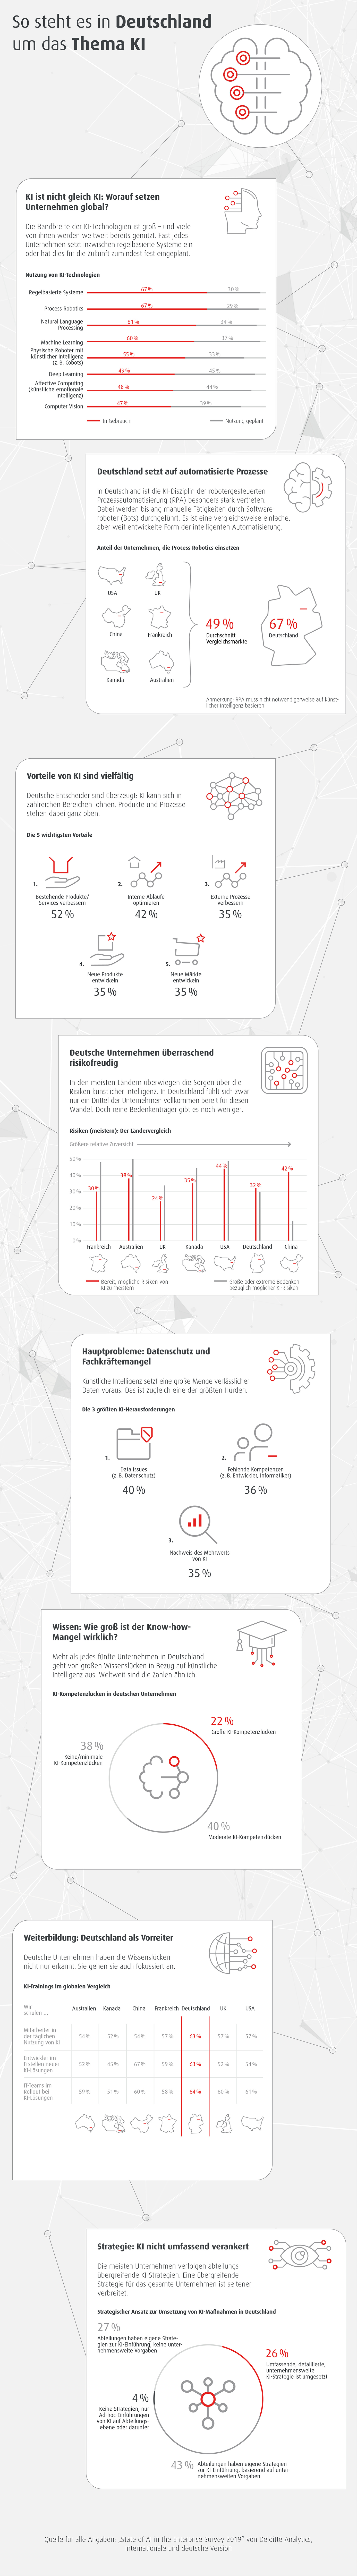 Infografik: KI-Standort Deutschland